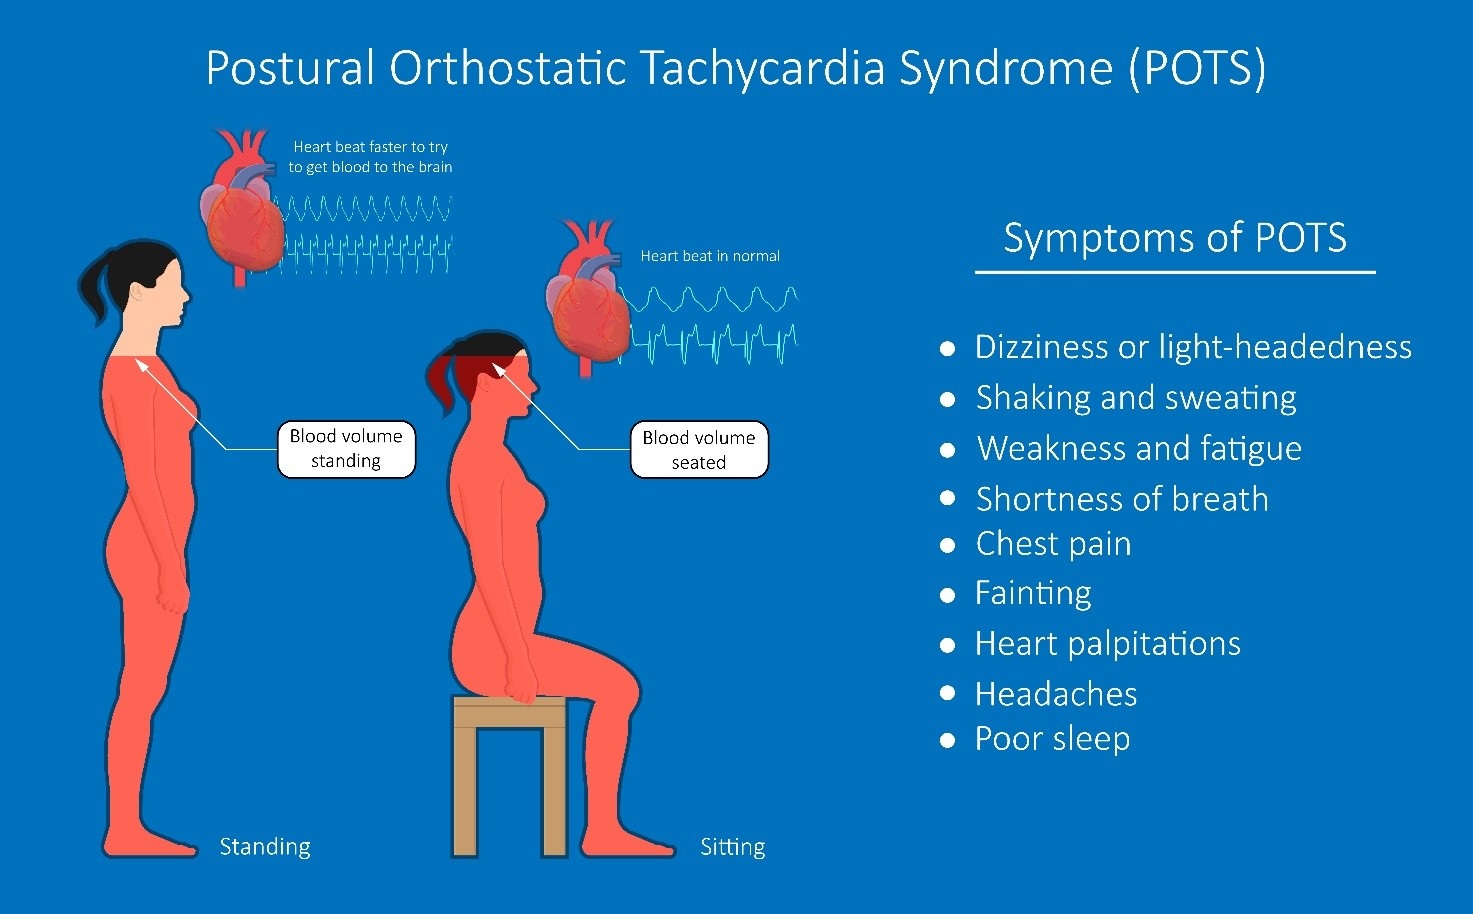 LAEC - Síndrome da Taquicardia Ortostática Postural (POTS